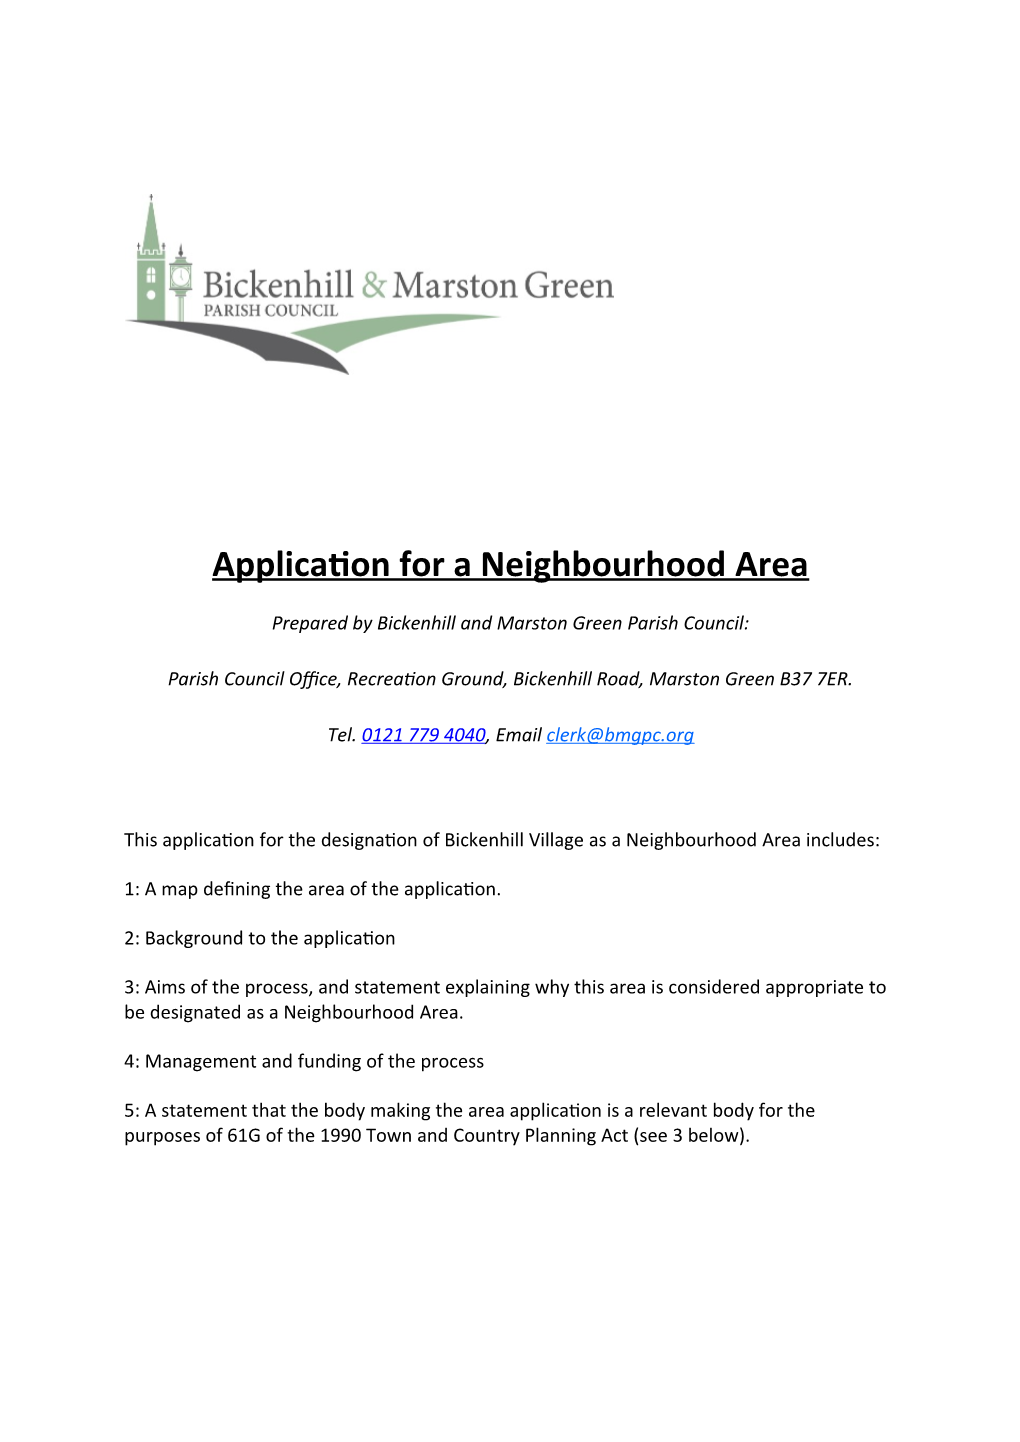 Bickenhill NA Application